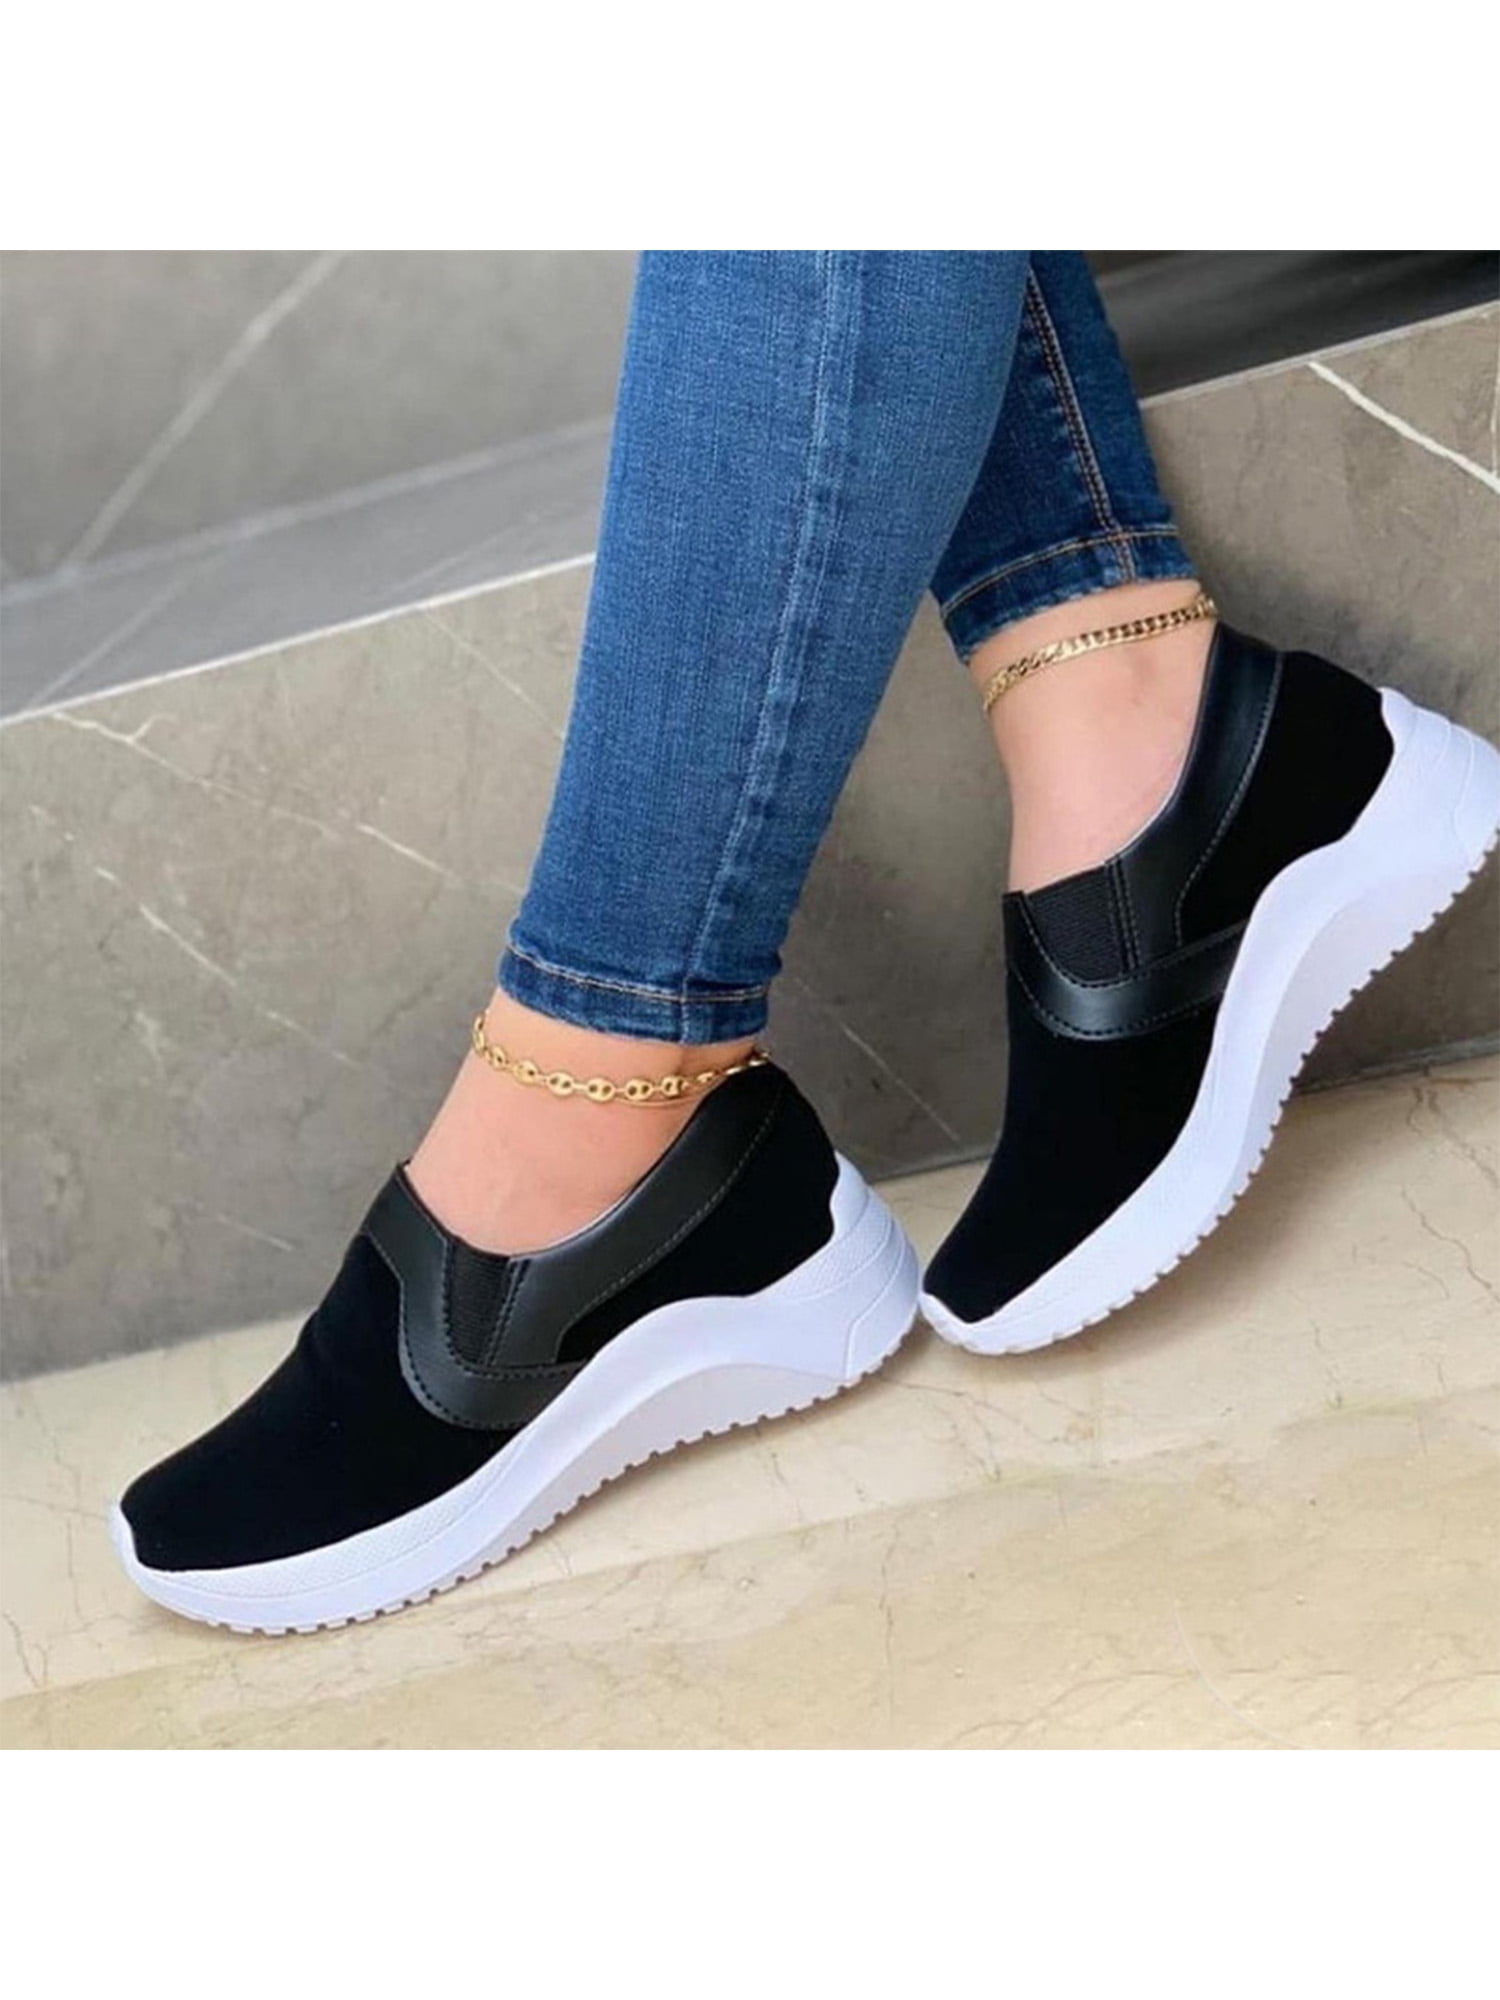 Womens Platform Hidden Wedge Loafers Sneakers Slip On High Heels Casual Shoes 